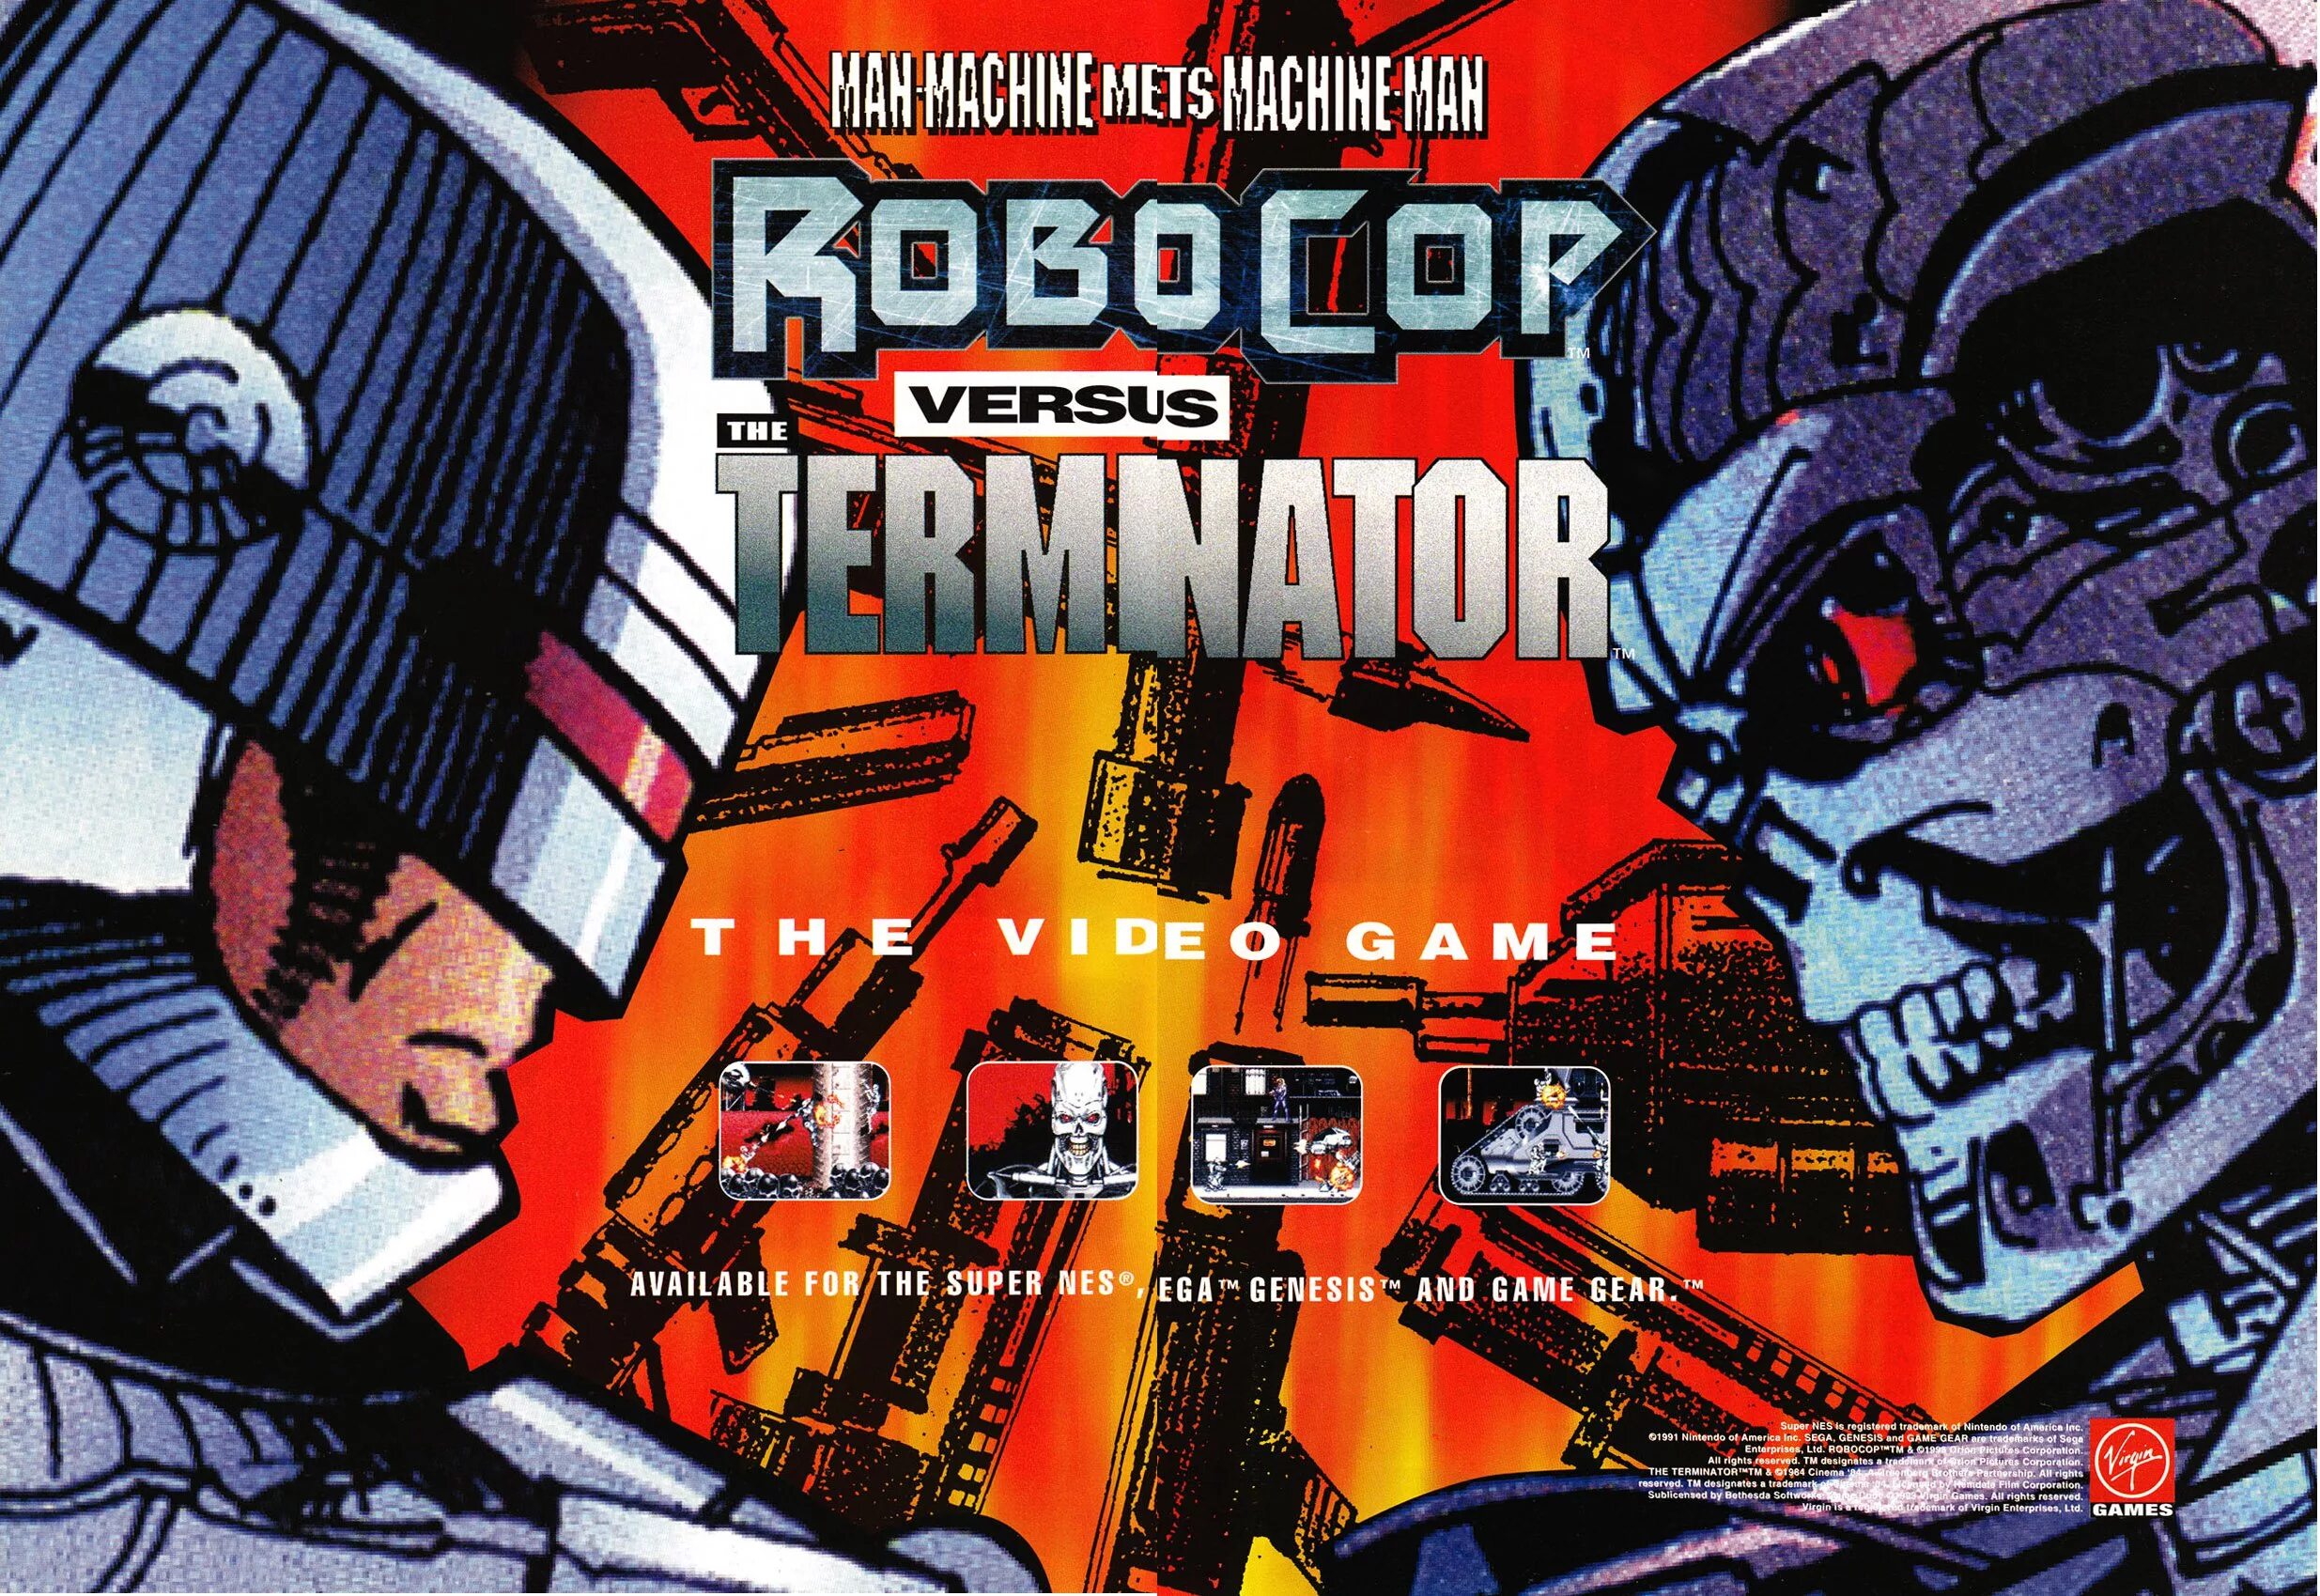 Robocop vs terminator. Терминатор 1 Sega. Robocop vs Terminator сега обложка. Игра Sega: Robocop versus Terminator. Robocop vs Terminator игра.